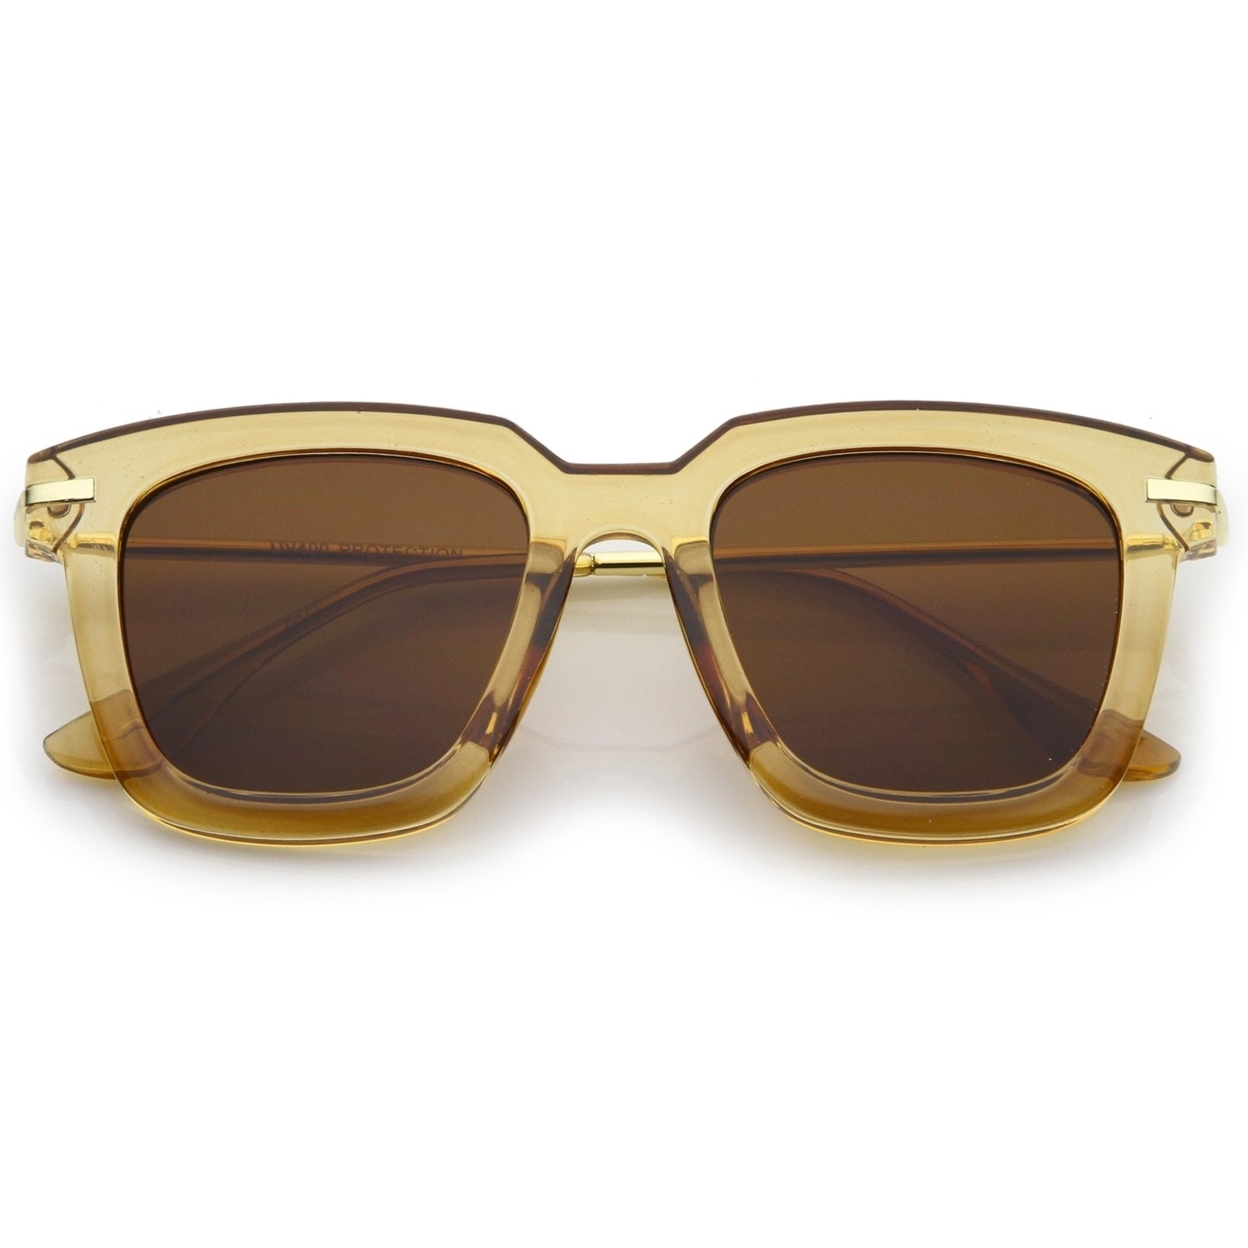 Oversize Slim Metal Temple Square Lens Horn Rimmed Sunglasses 50mm - Black-Gold / Smoke